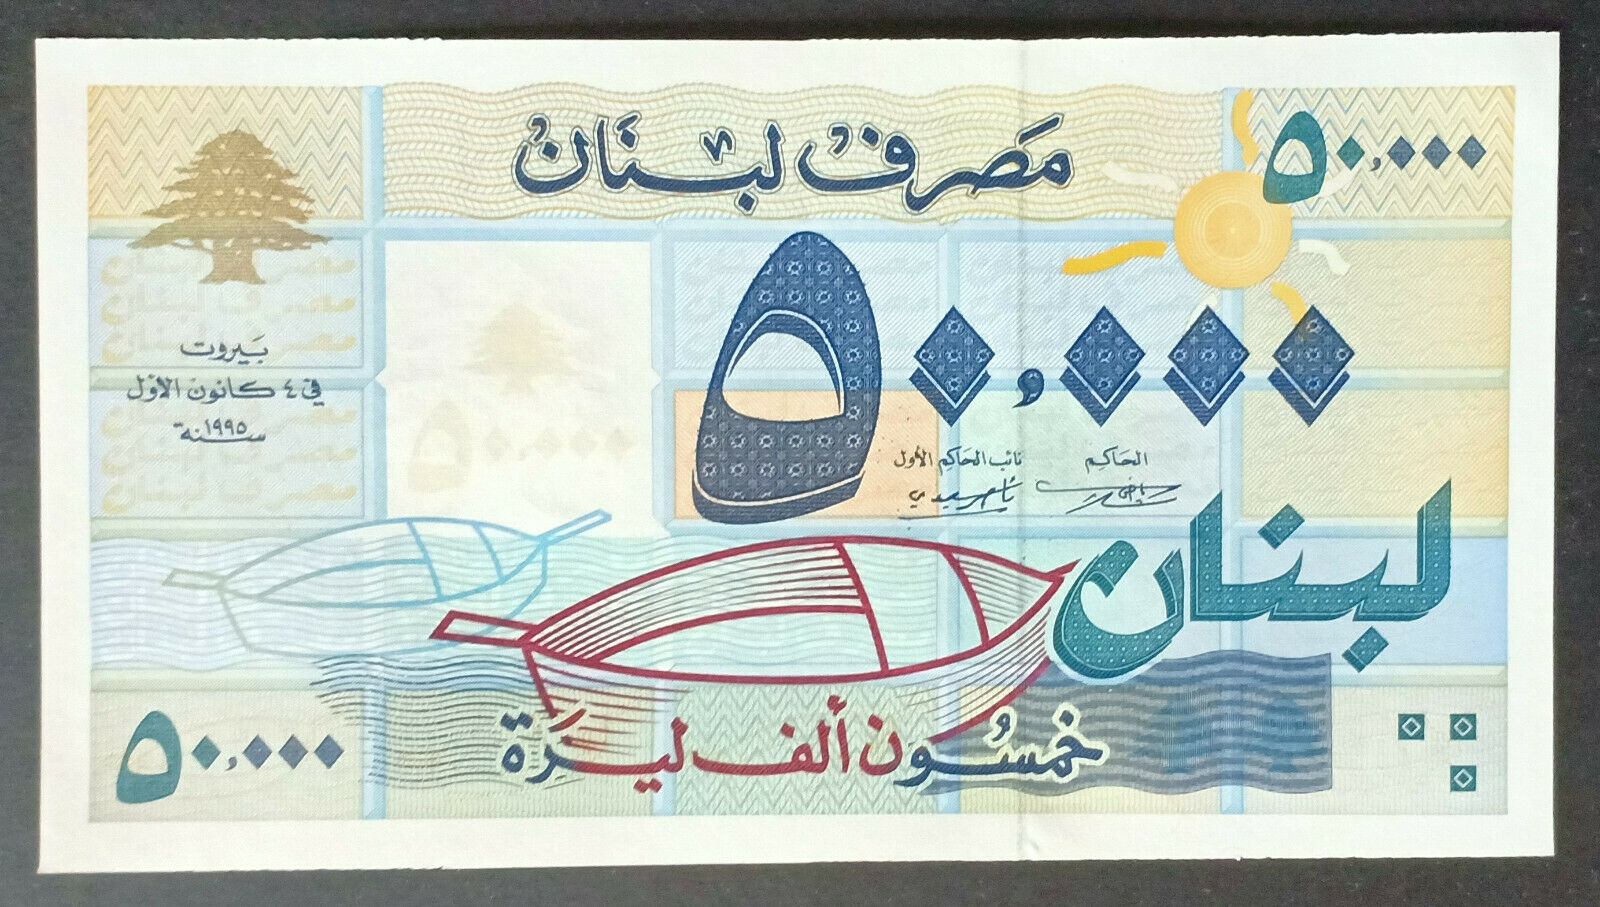 Kr621 Lebanon 1995 50000 Unc High Value Banknote P-73a2 Geometric Design Issue